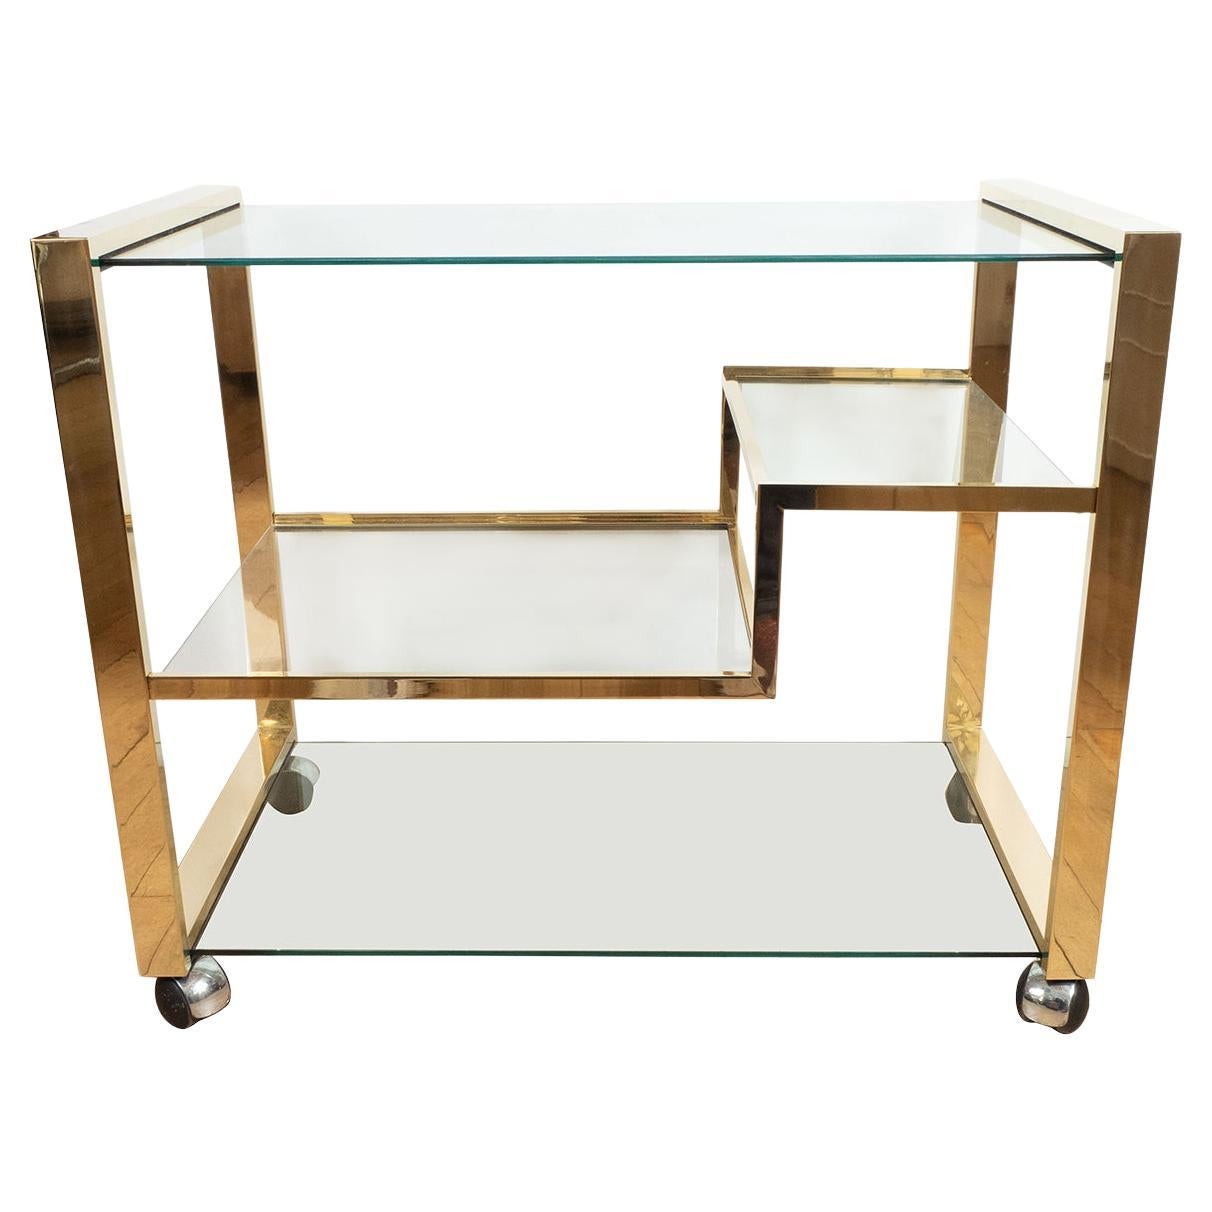 Brass rolling bar cart with glass shelves